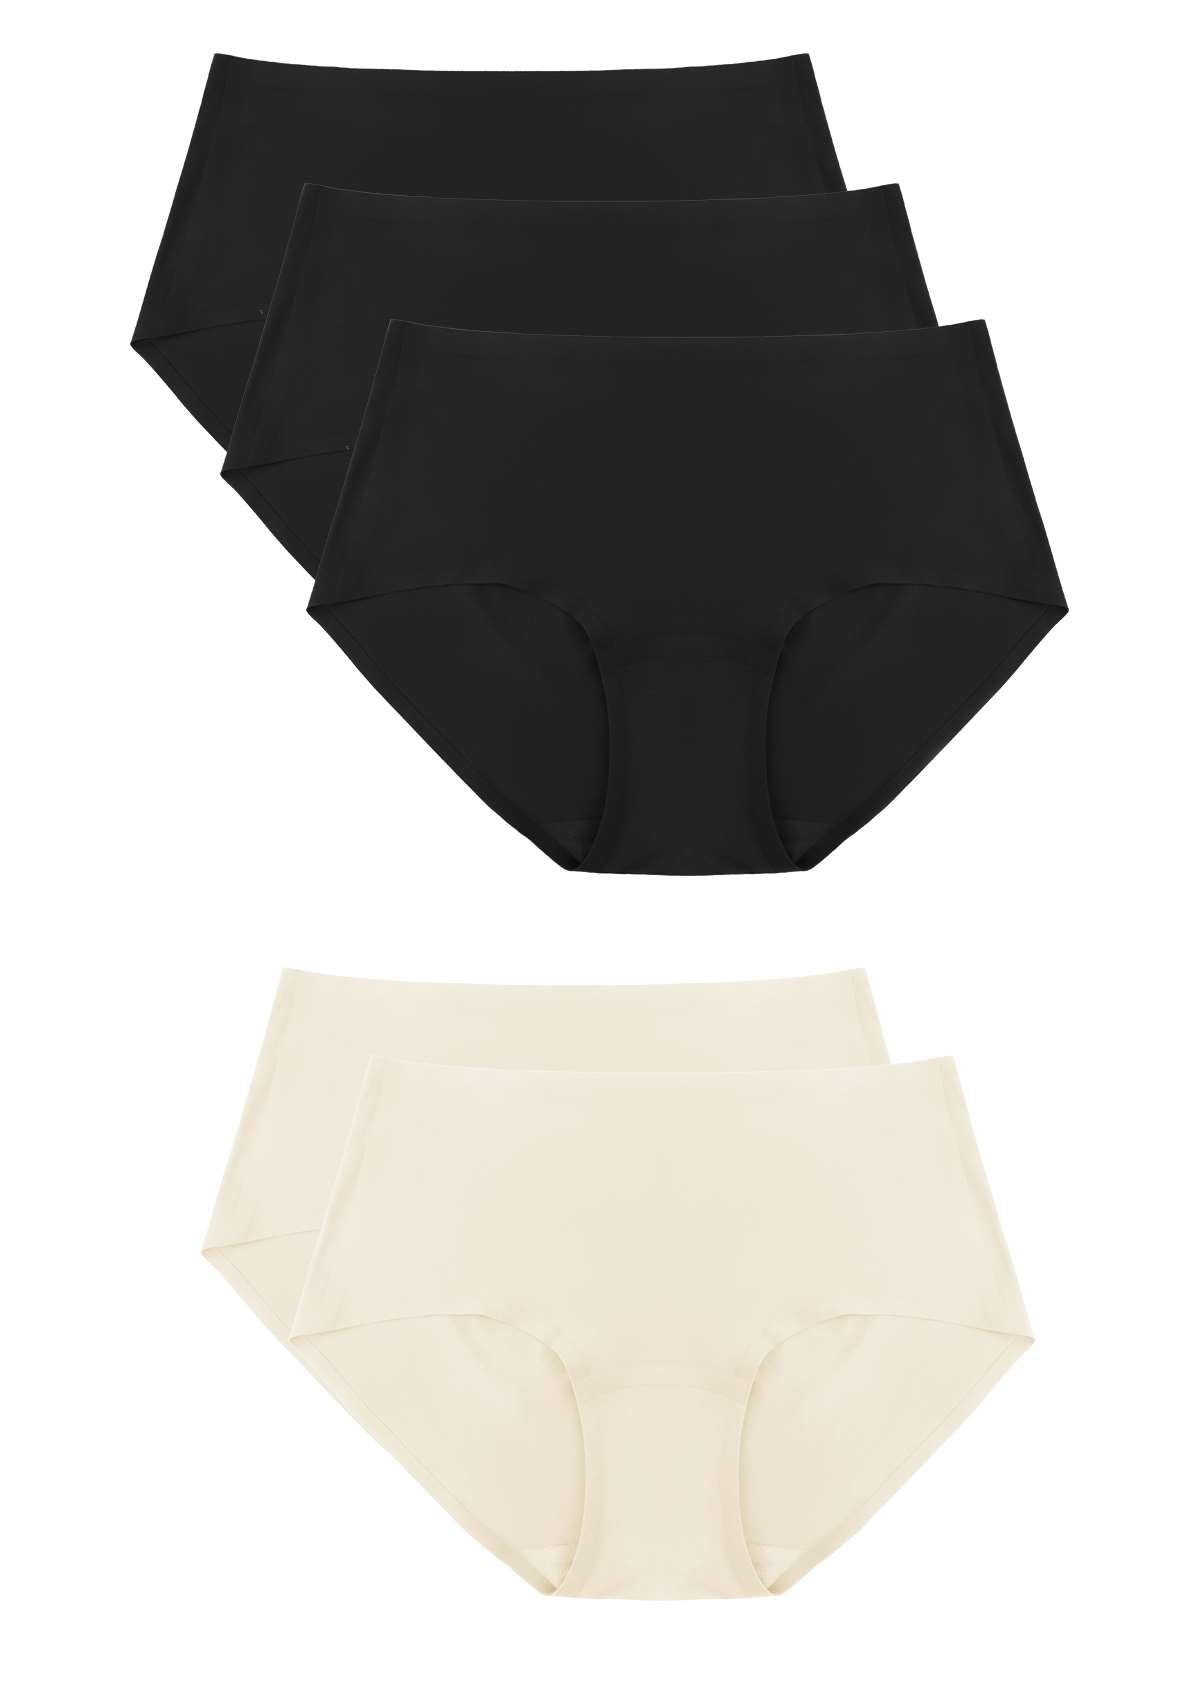 HSIA FlexiFit Soft Stretch Seamless Brief Underwear Bundle - 10 Packs/$35 / L-2XL / 3*Black+2*Peach Beige